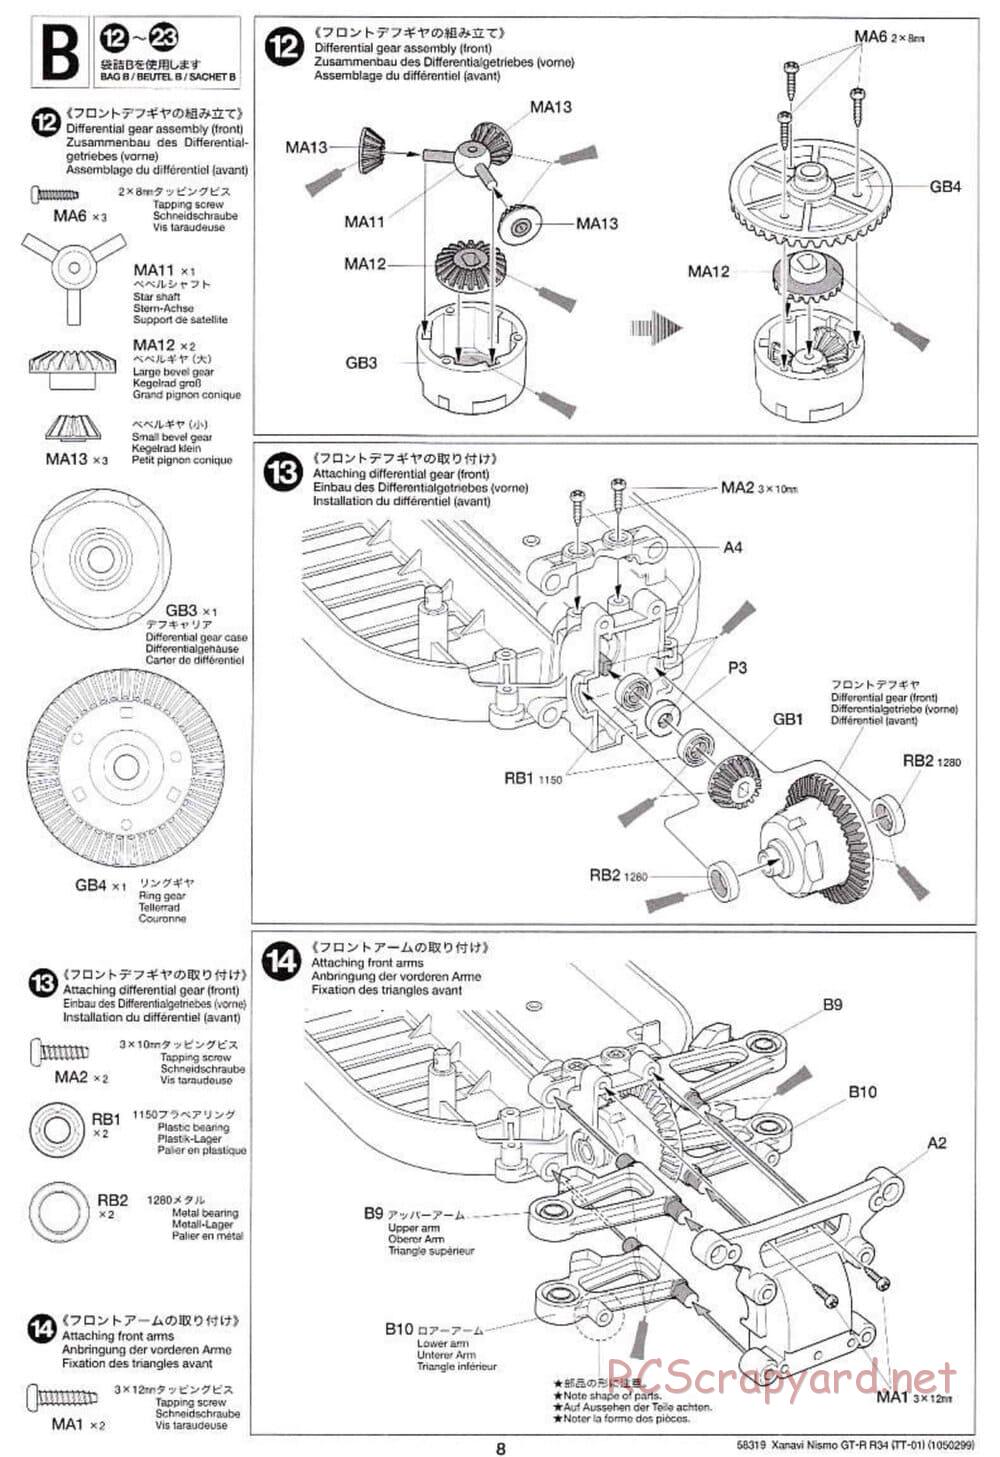 Tamiya - Xanavi Nismo GT-R R34 - TT-01 Chassis - Manual - Page 8